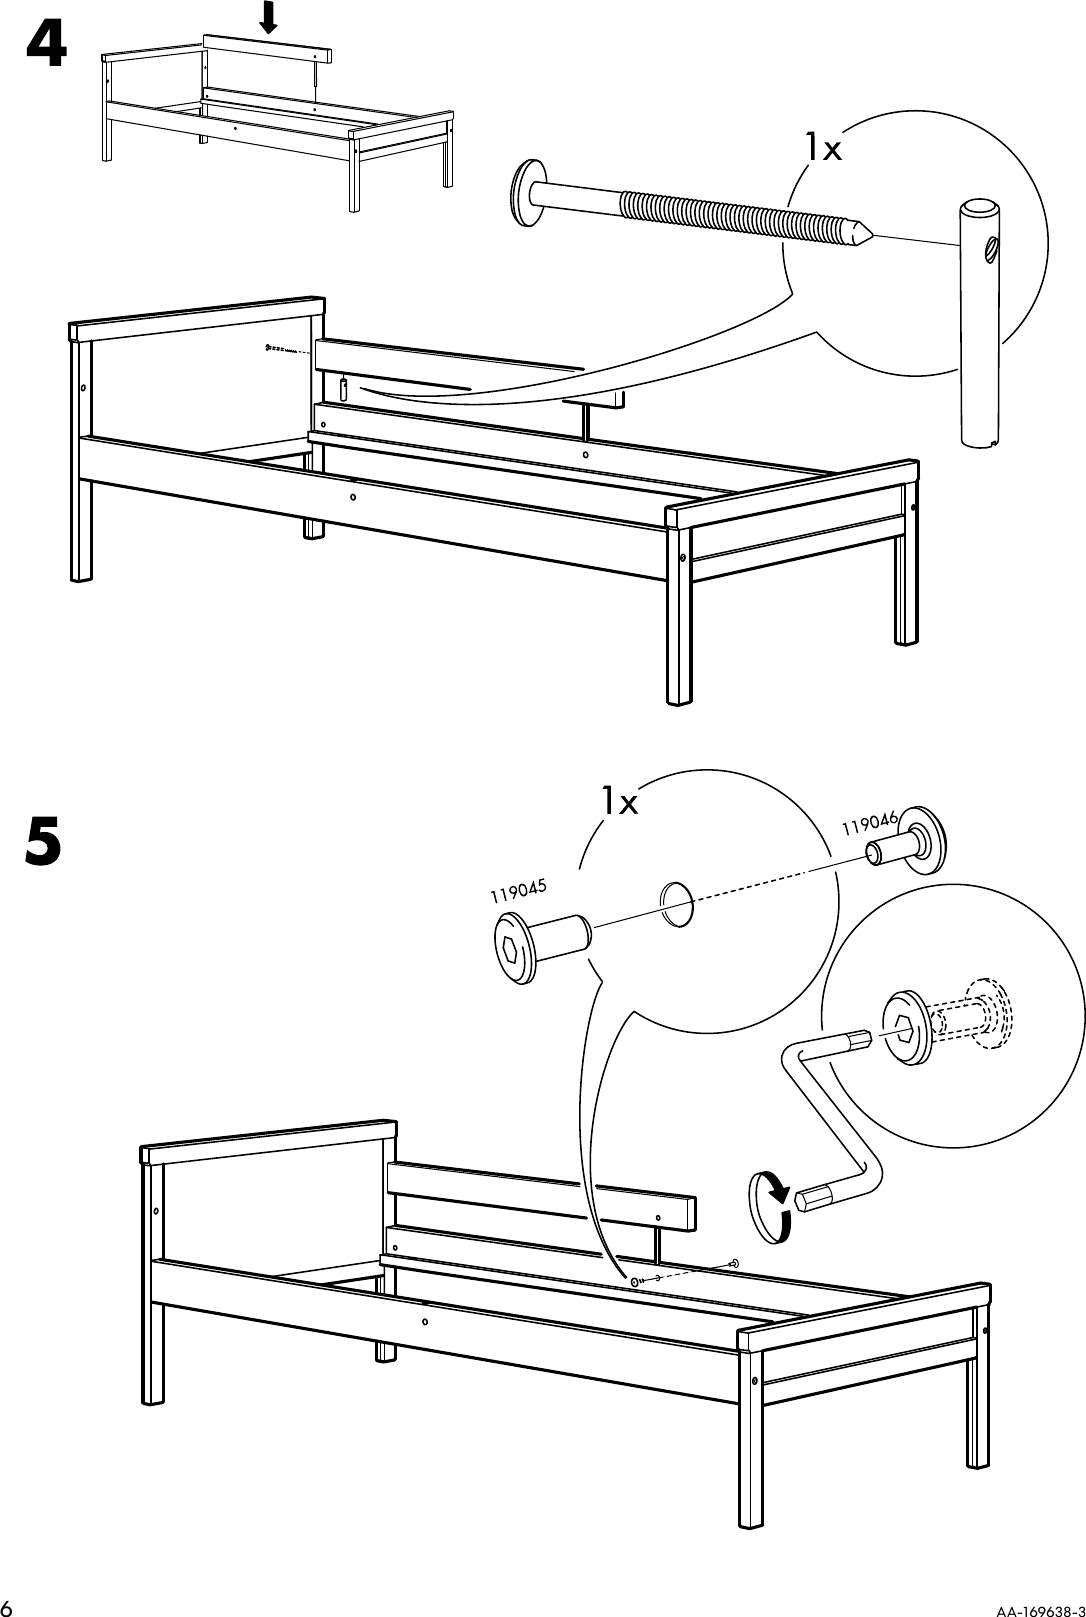 Page 6 of 8 - Ikea Ikea-Sniglar-Bed-Frame-W-Guide-Rail-Assembly-Instruction